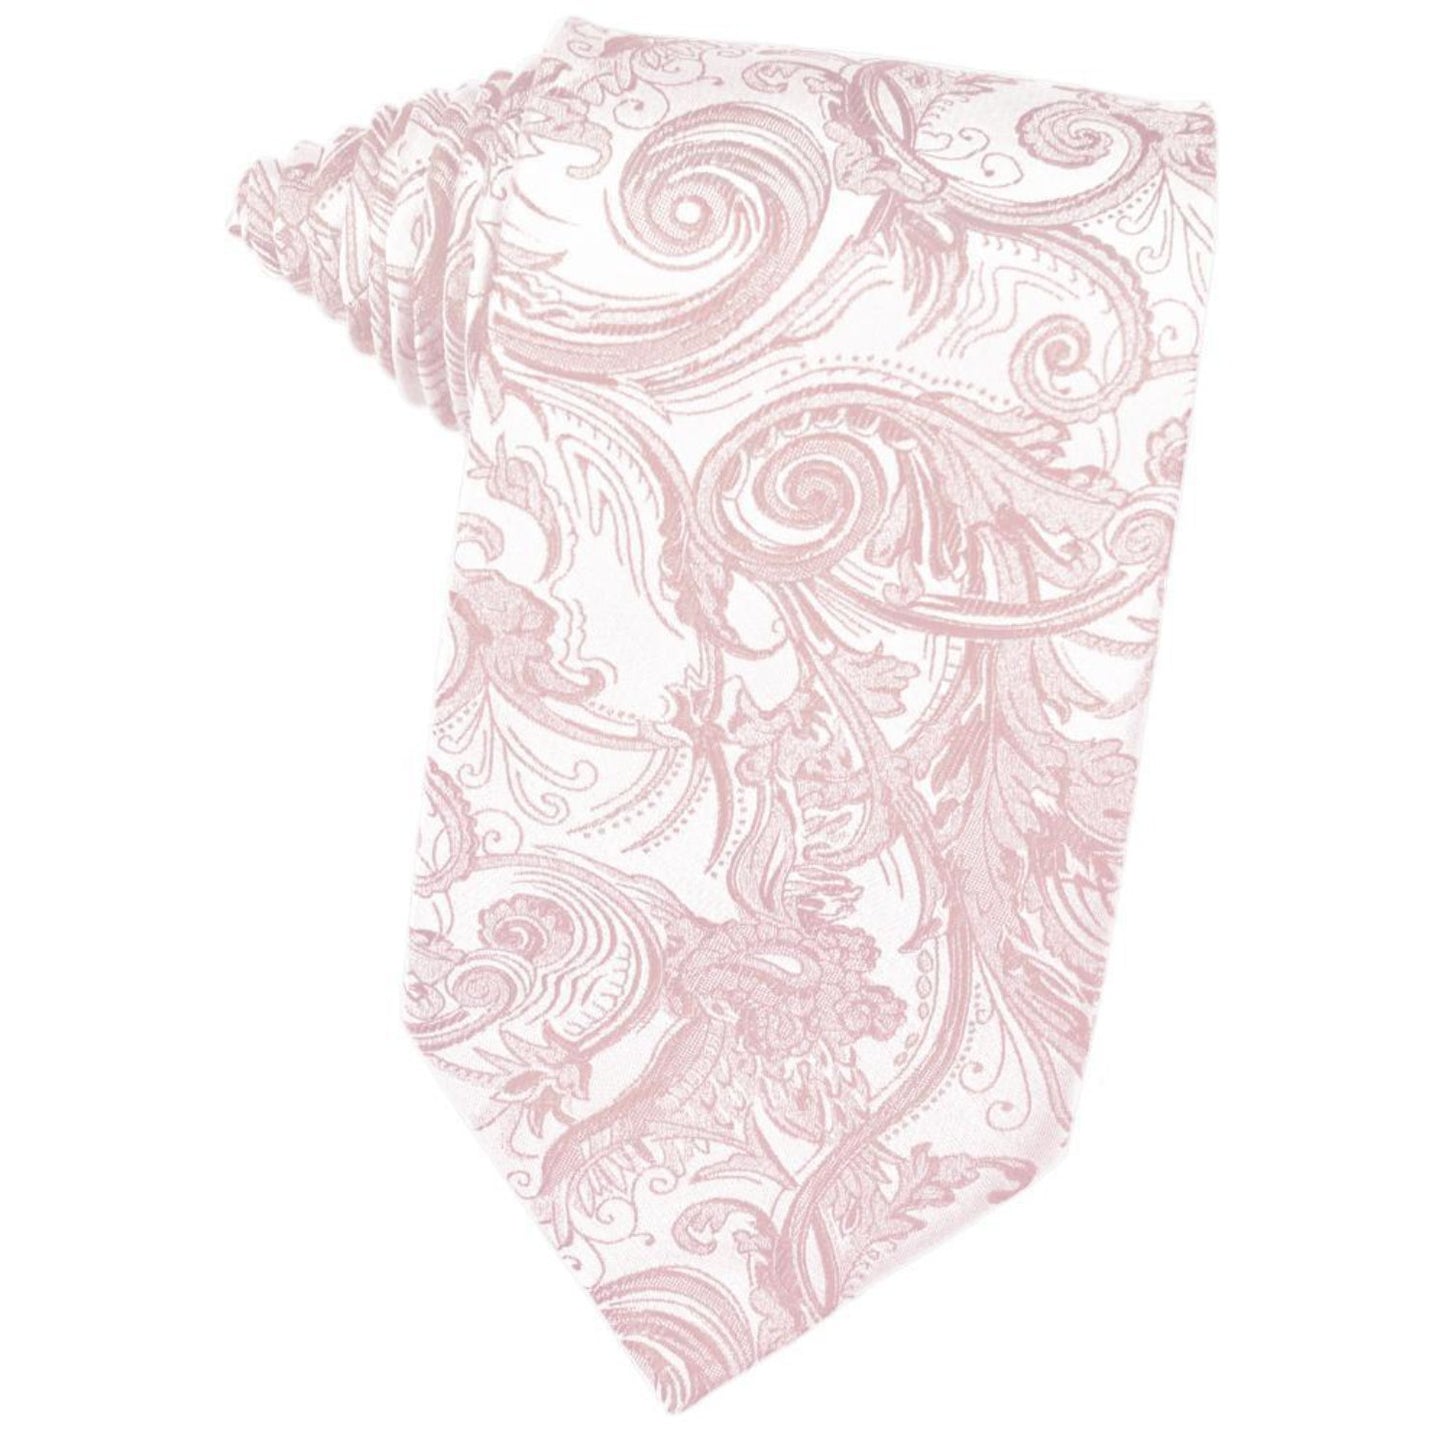 Tapestry Self-Tie Necktie